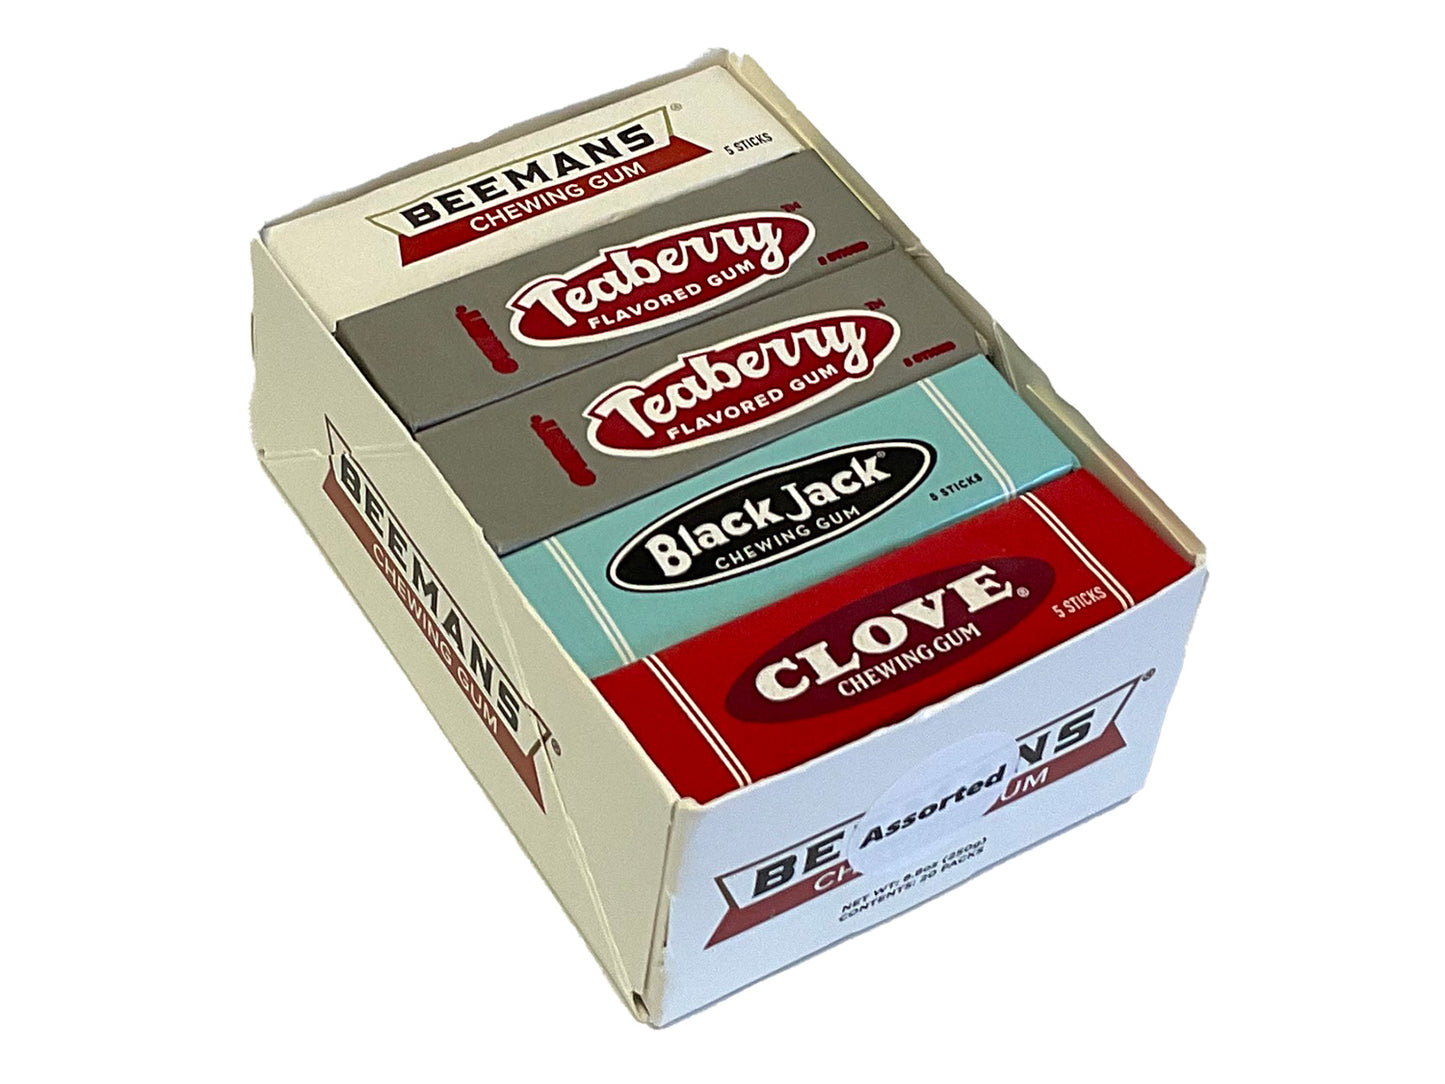 Nostalgia Gum Assortment - Beemans, Teaberry, Clove, BlackJack Gum